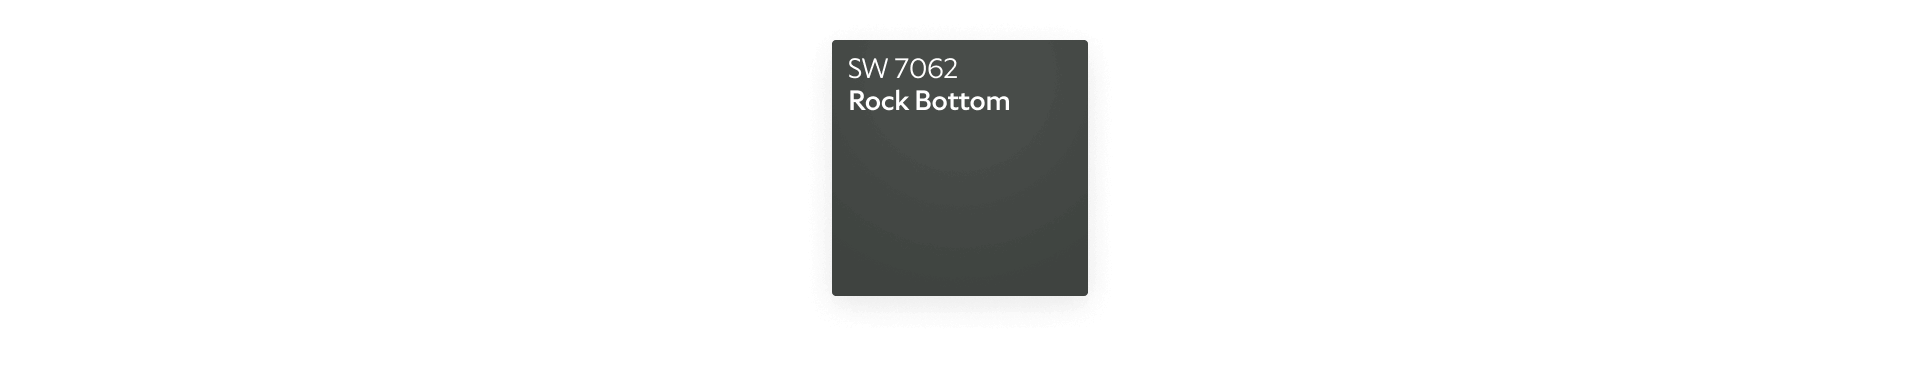 Color chip of Rock Bottom SW 7062.